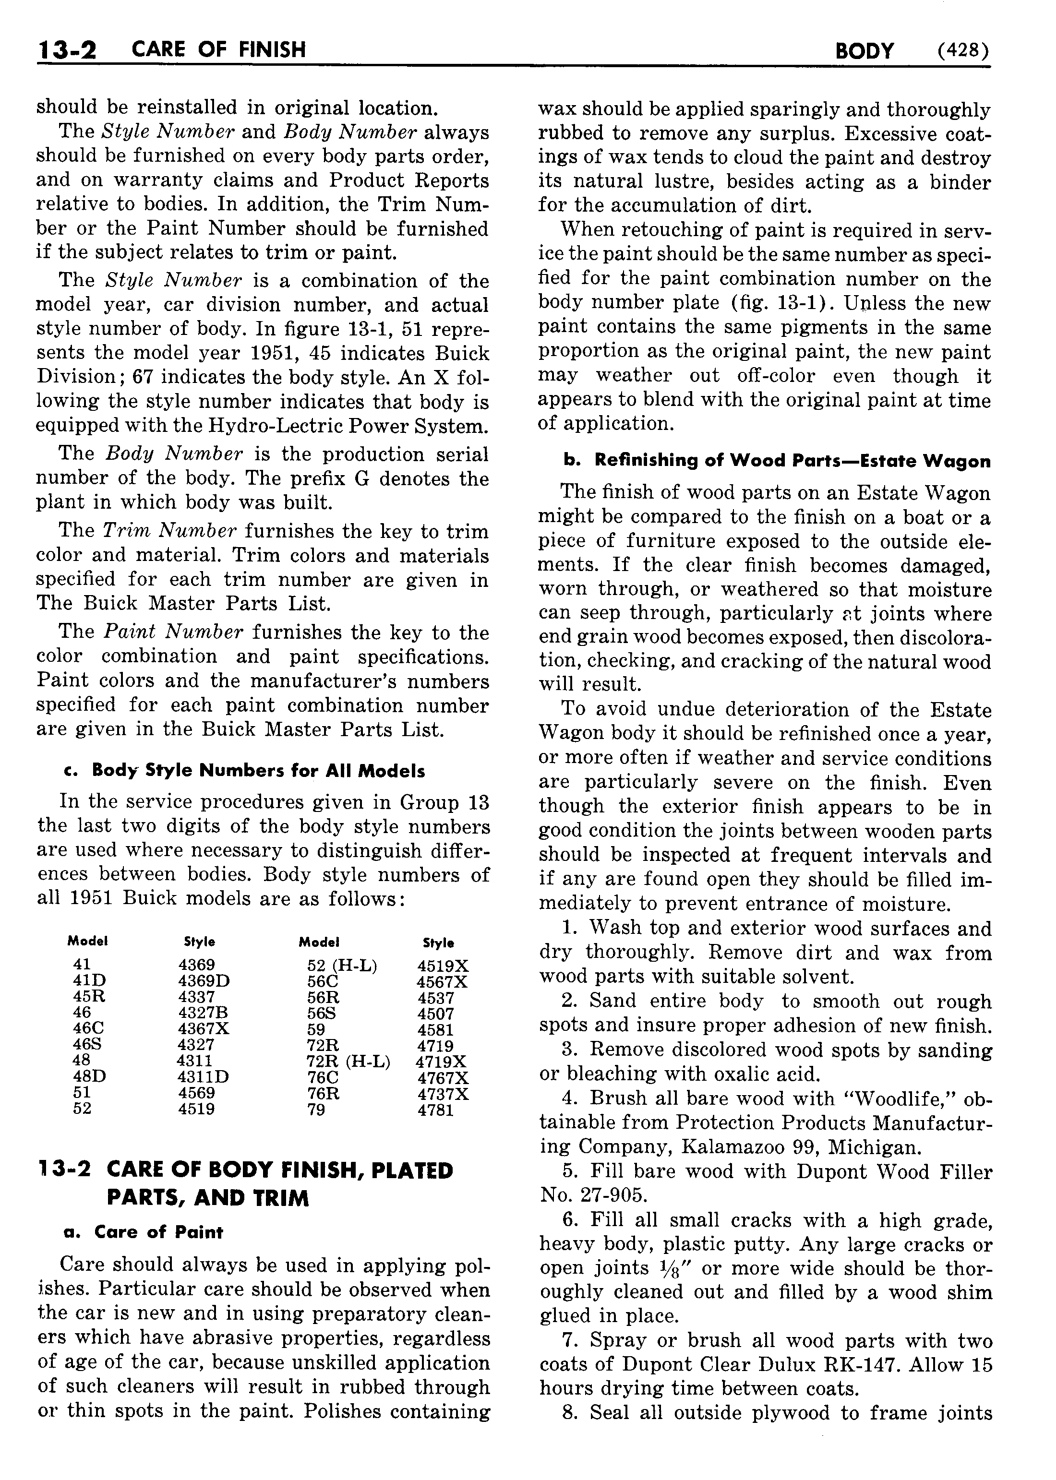 n_14 1951 Buick Shop Manual - Body-002-002.jpg